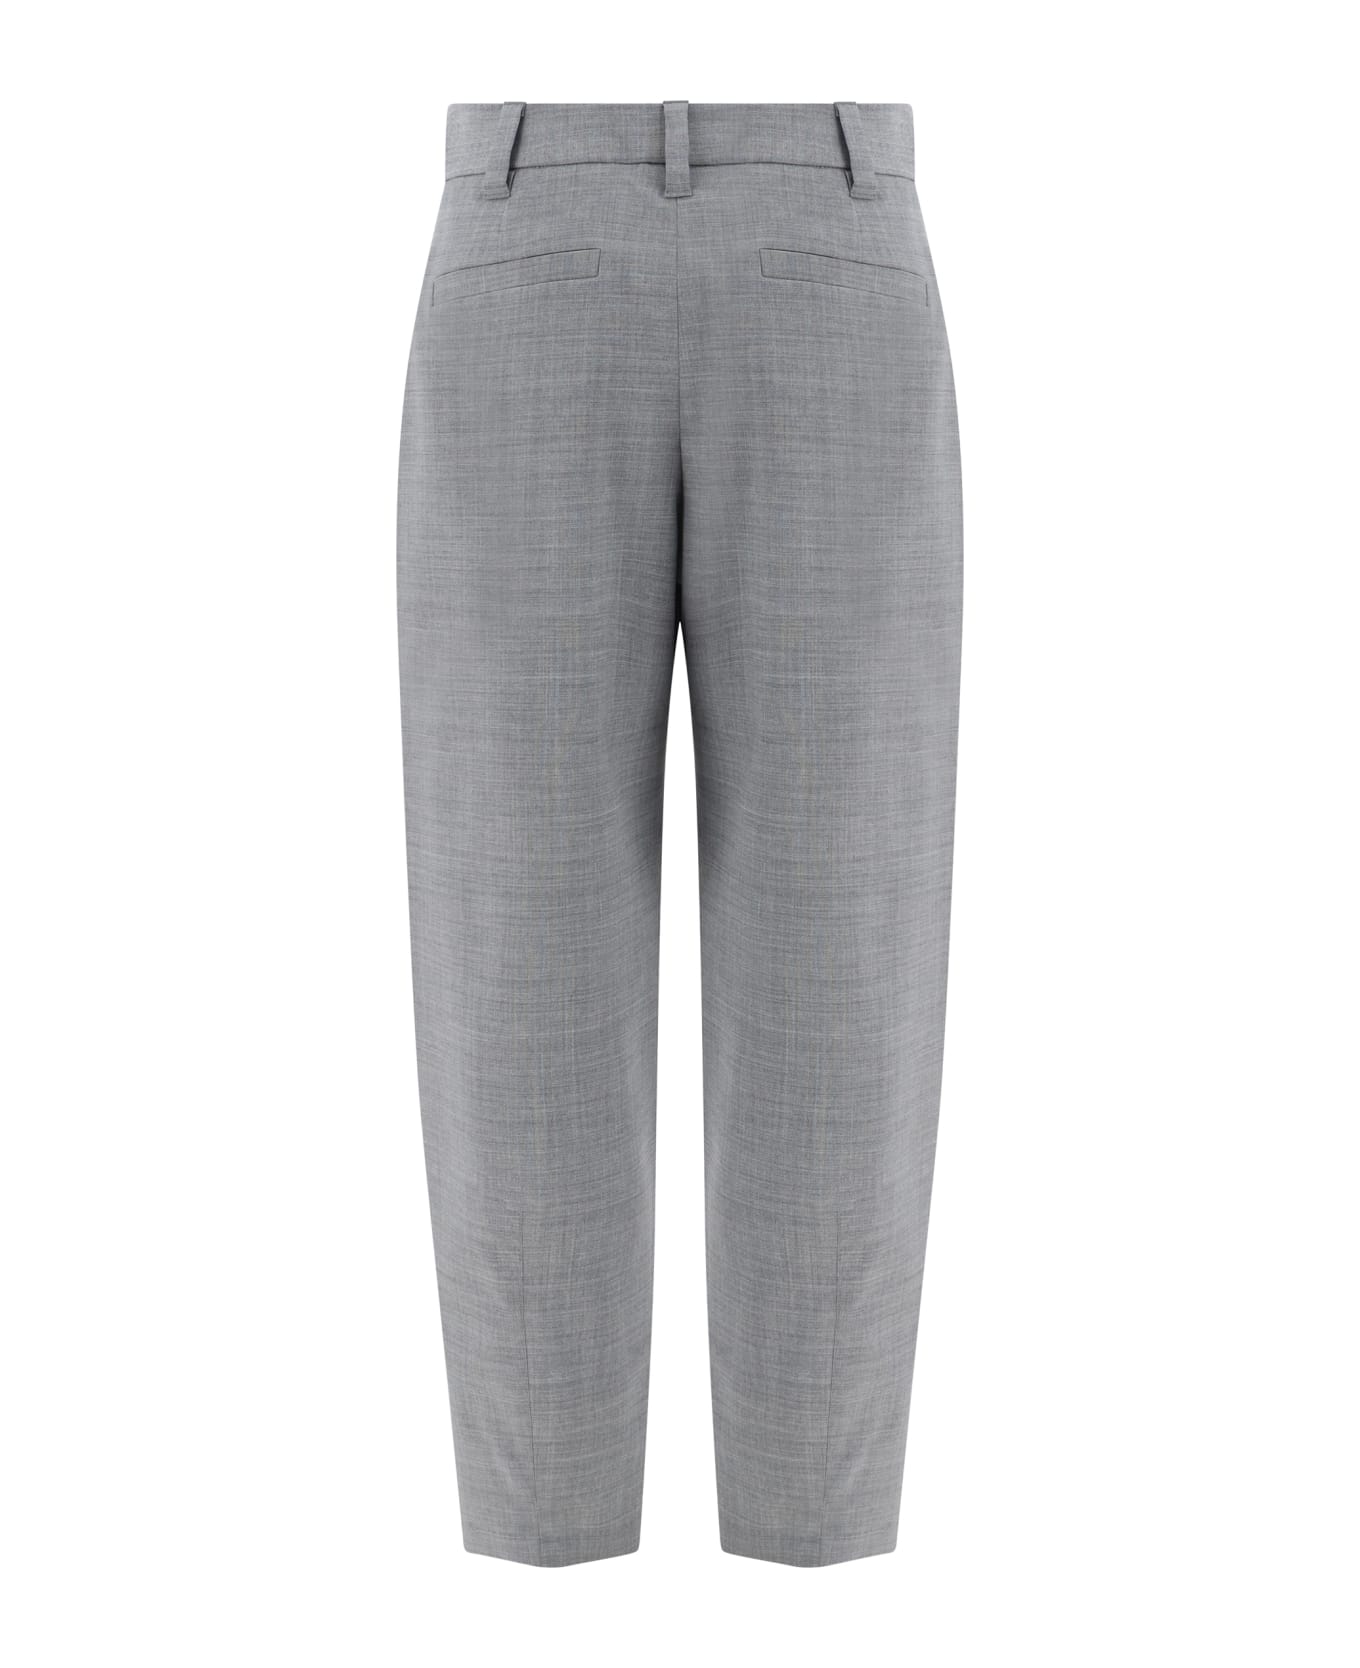 Brunello Cucinelli Pants - Light Grey